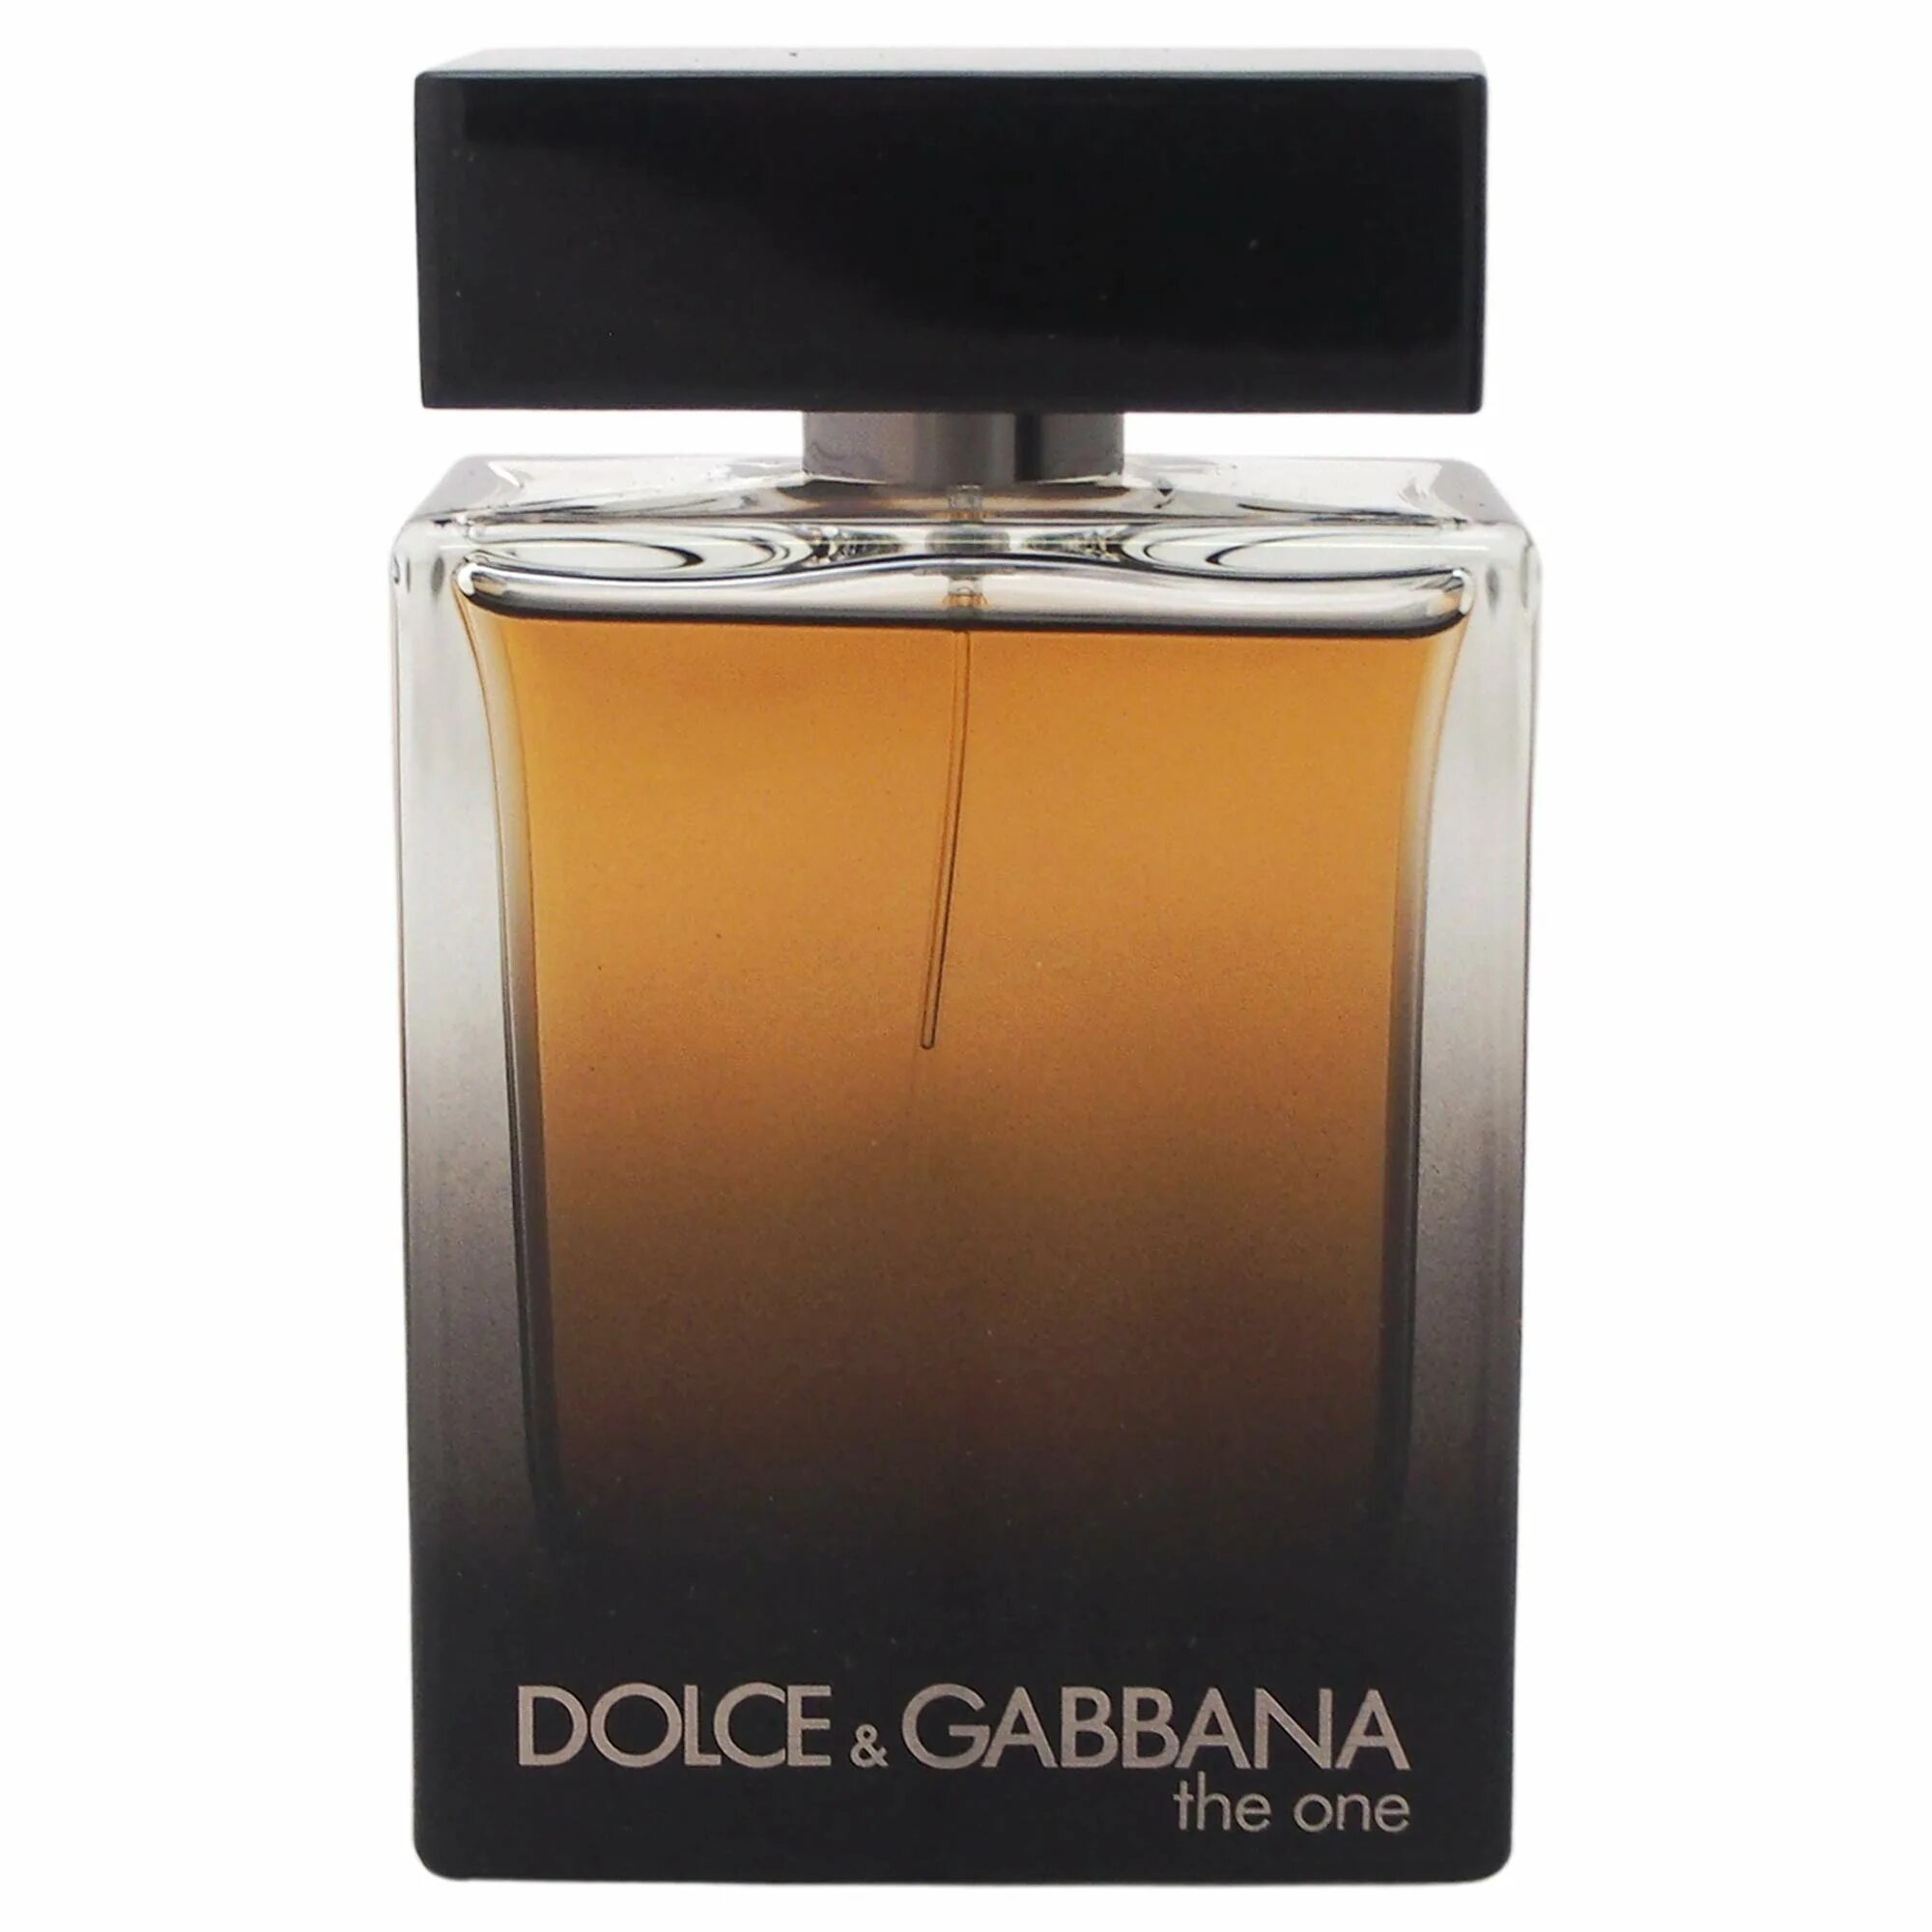 Упаковка дольче габбана. Dolce Gabbana the one for men 100 мл. Dolce Gabbana the one 100ml. Dolce Gabbana the one 100ml мужские. Dolce Gabbana the one for men Eau de Parfum.